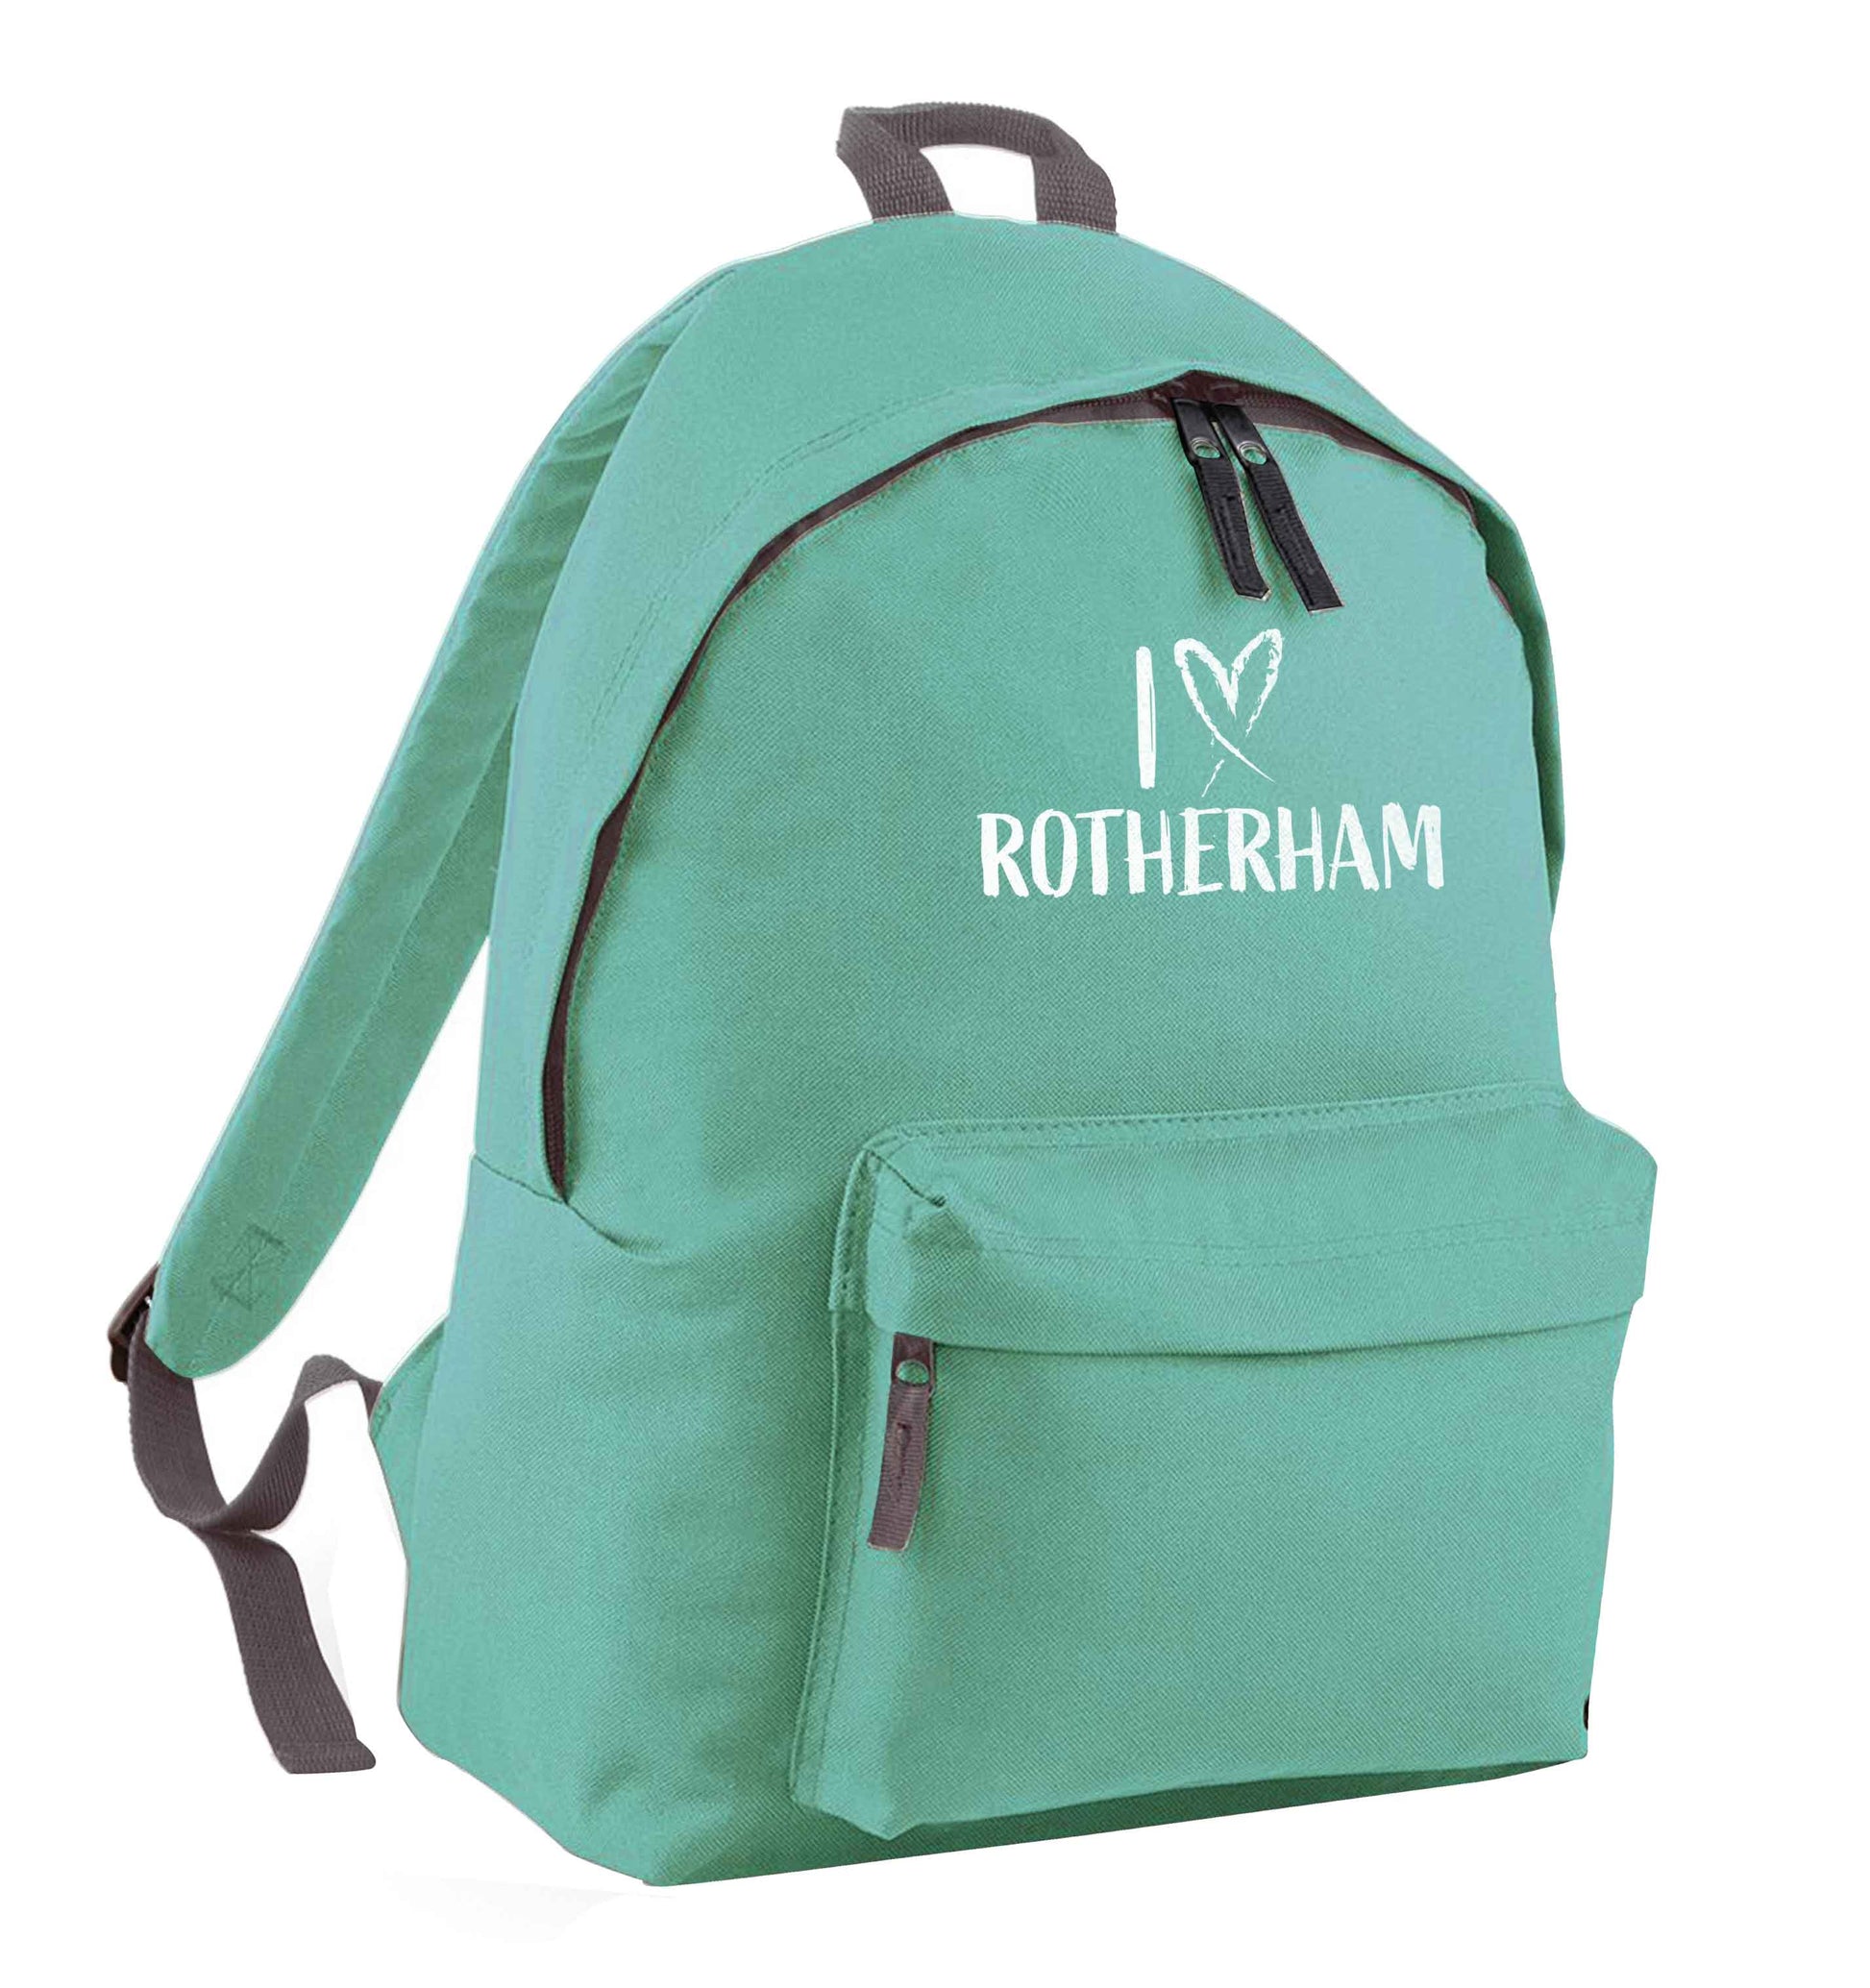 I love Rotherham mint adults backpack